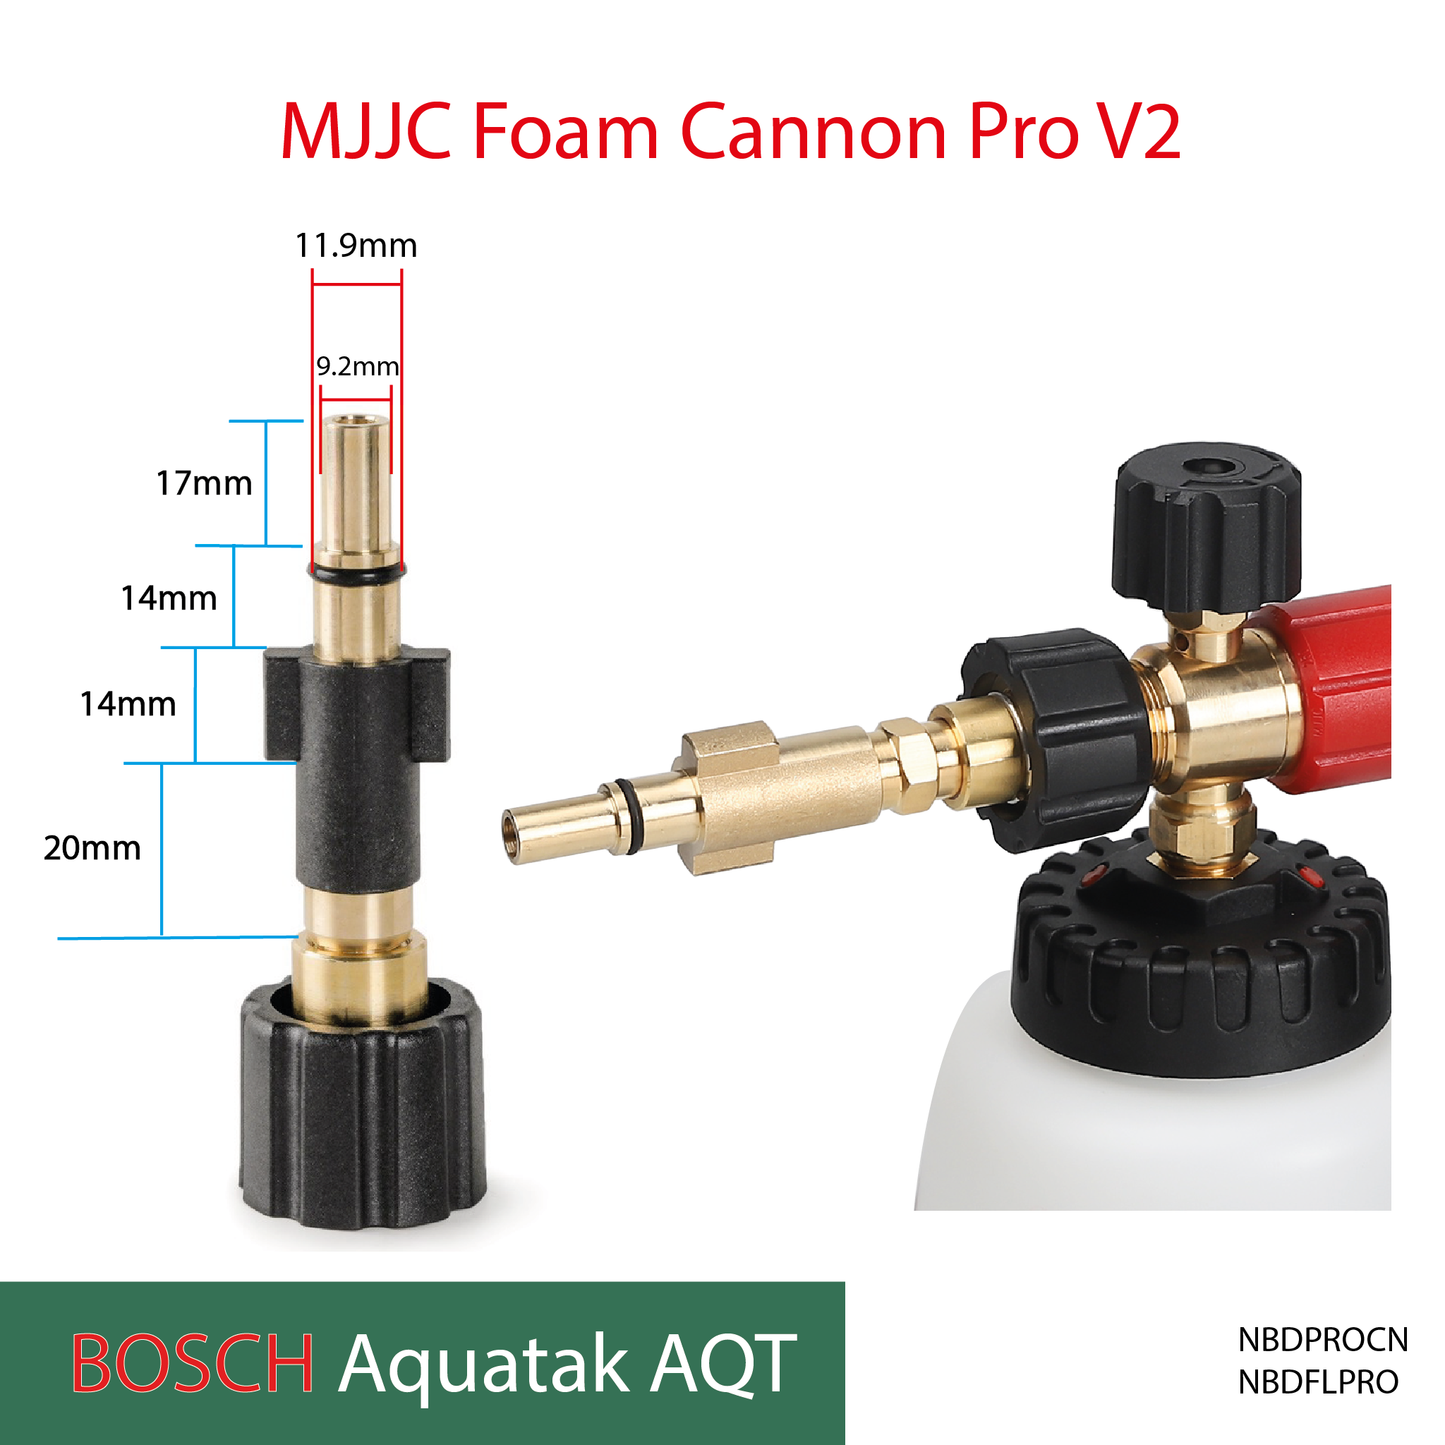 Bosch Aquatak AQT pressure washer - MJJC Foam Cannon Pro V2 (Pressure Washer Snow Foam Lance Gun)